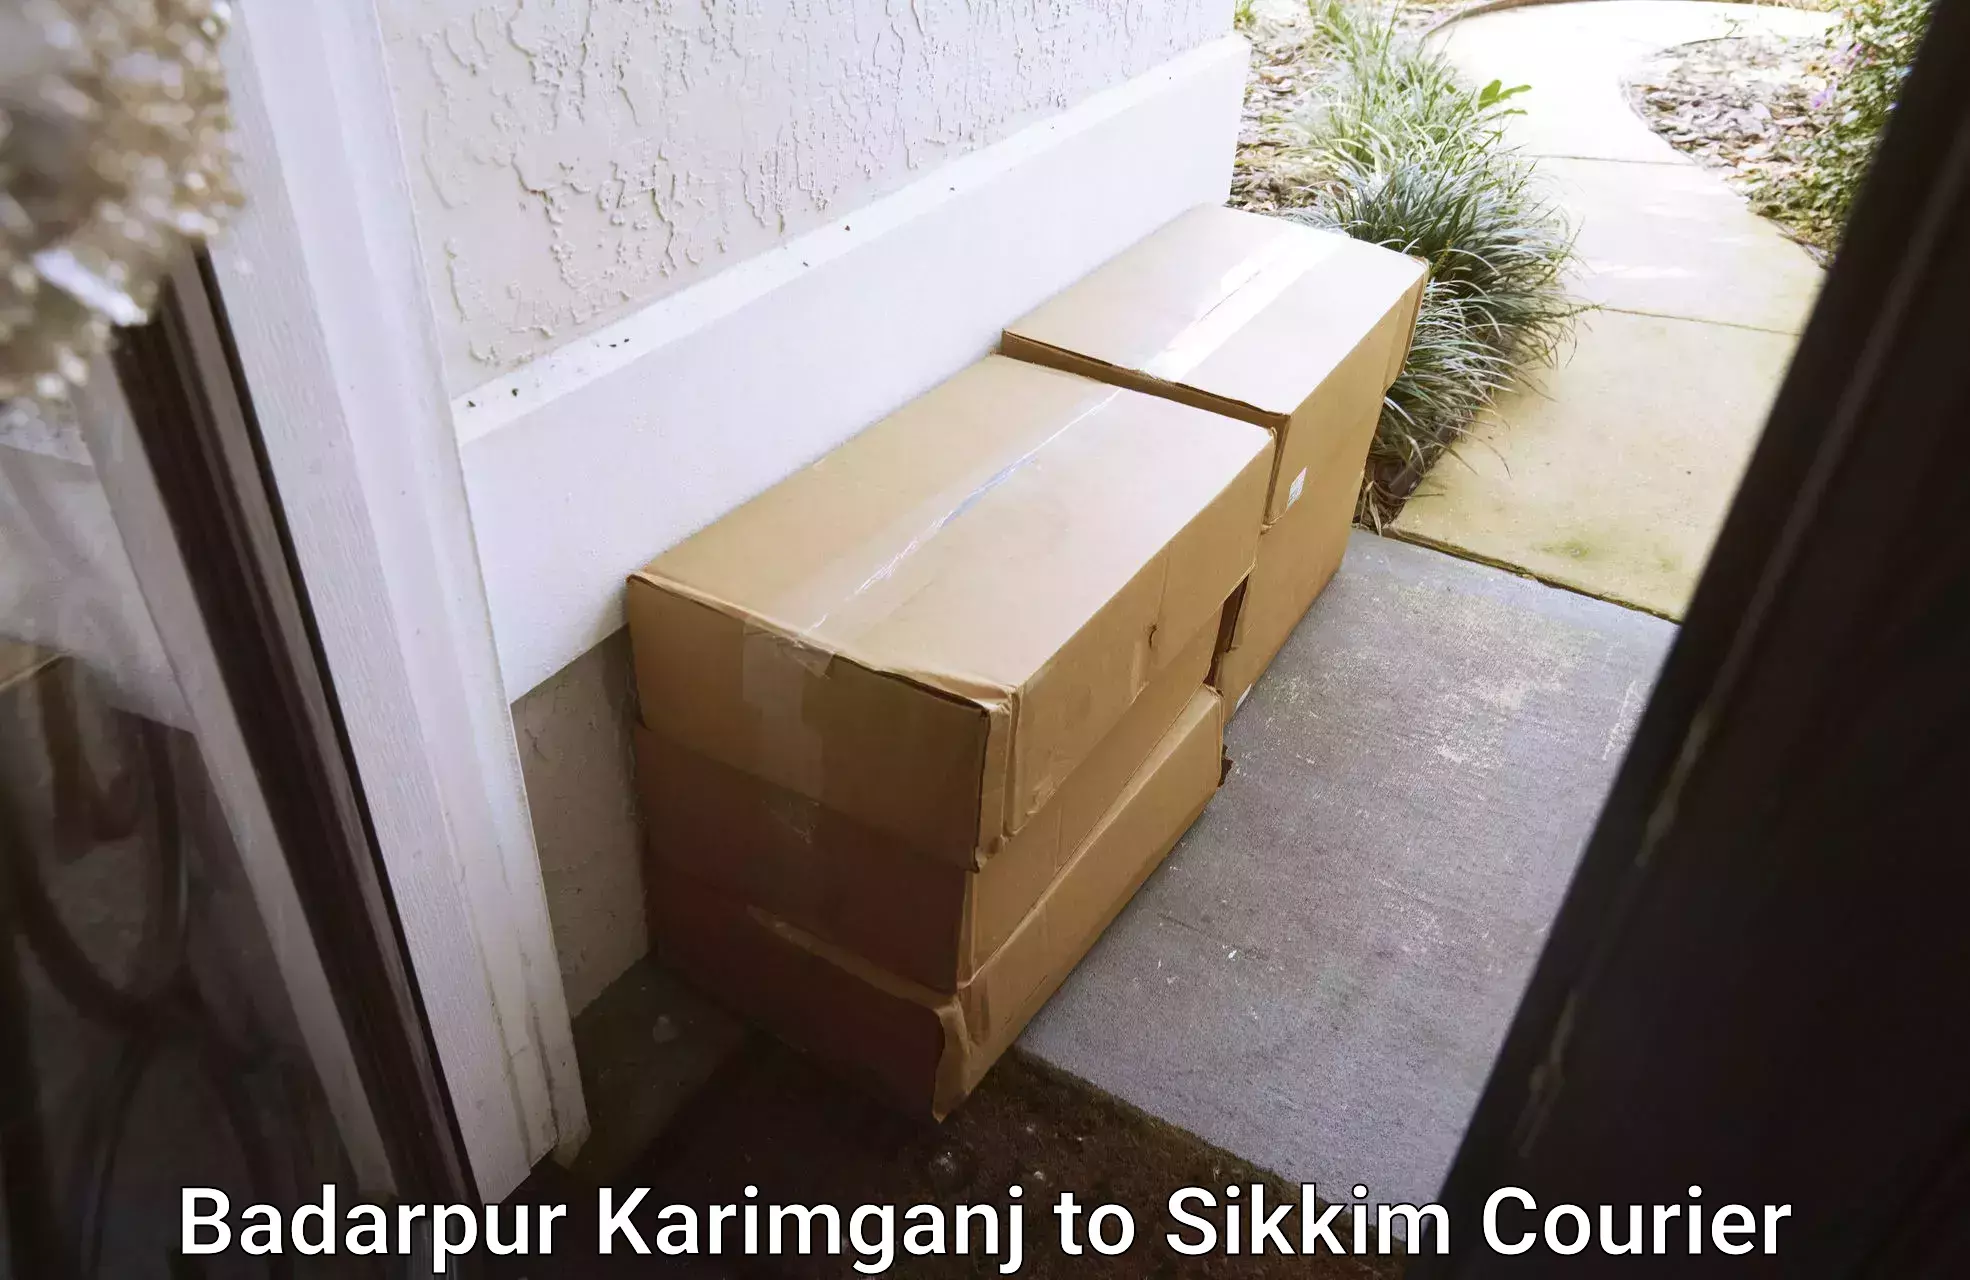 Lightweight parcel options Badarpur Karimganj to Jorethang